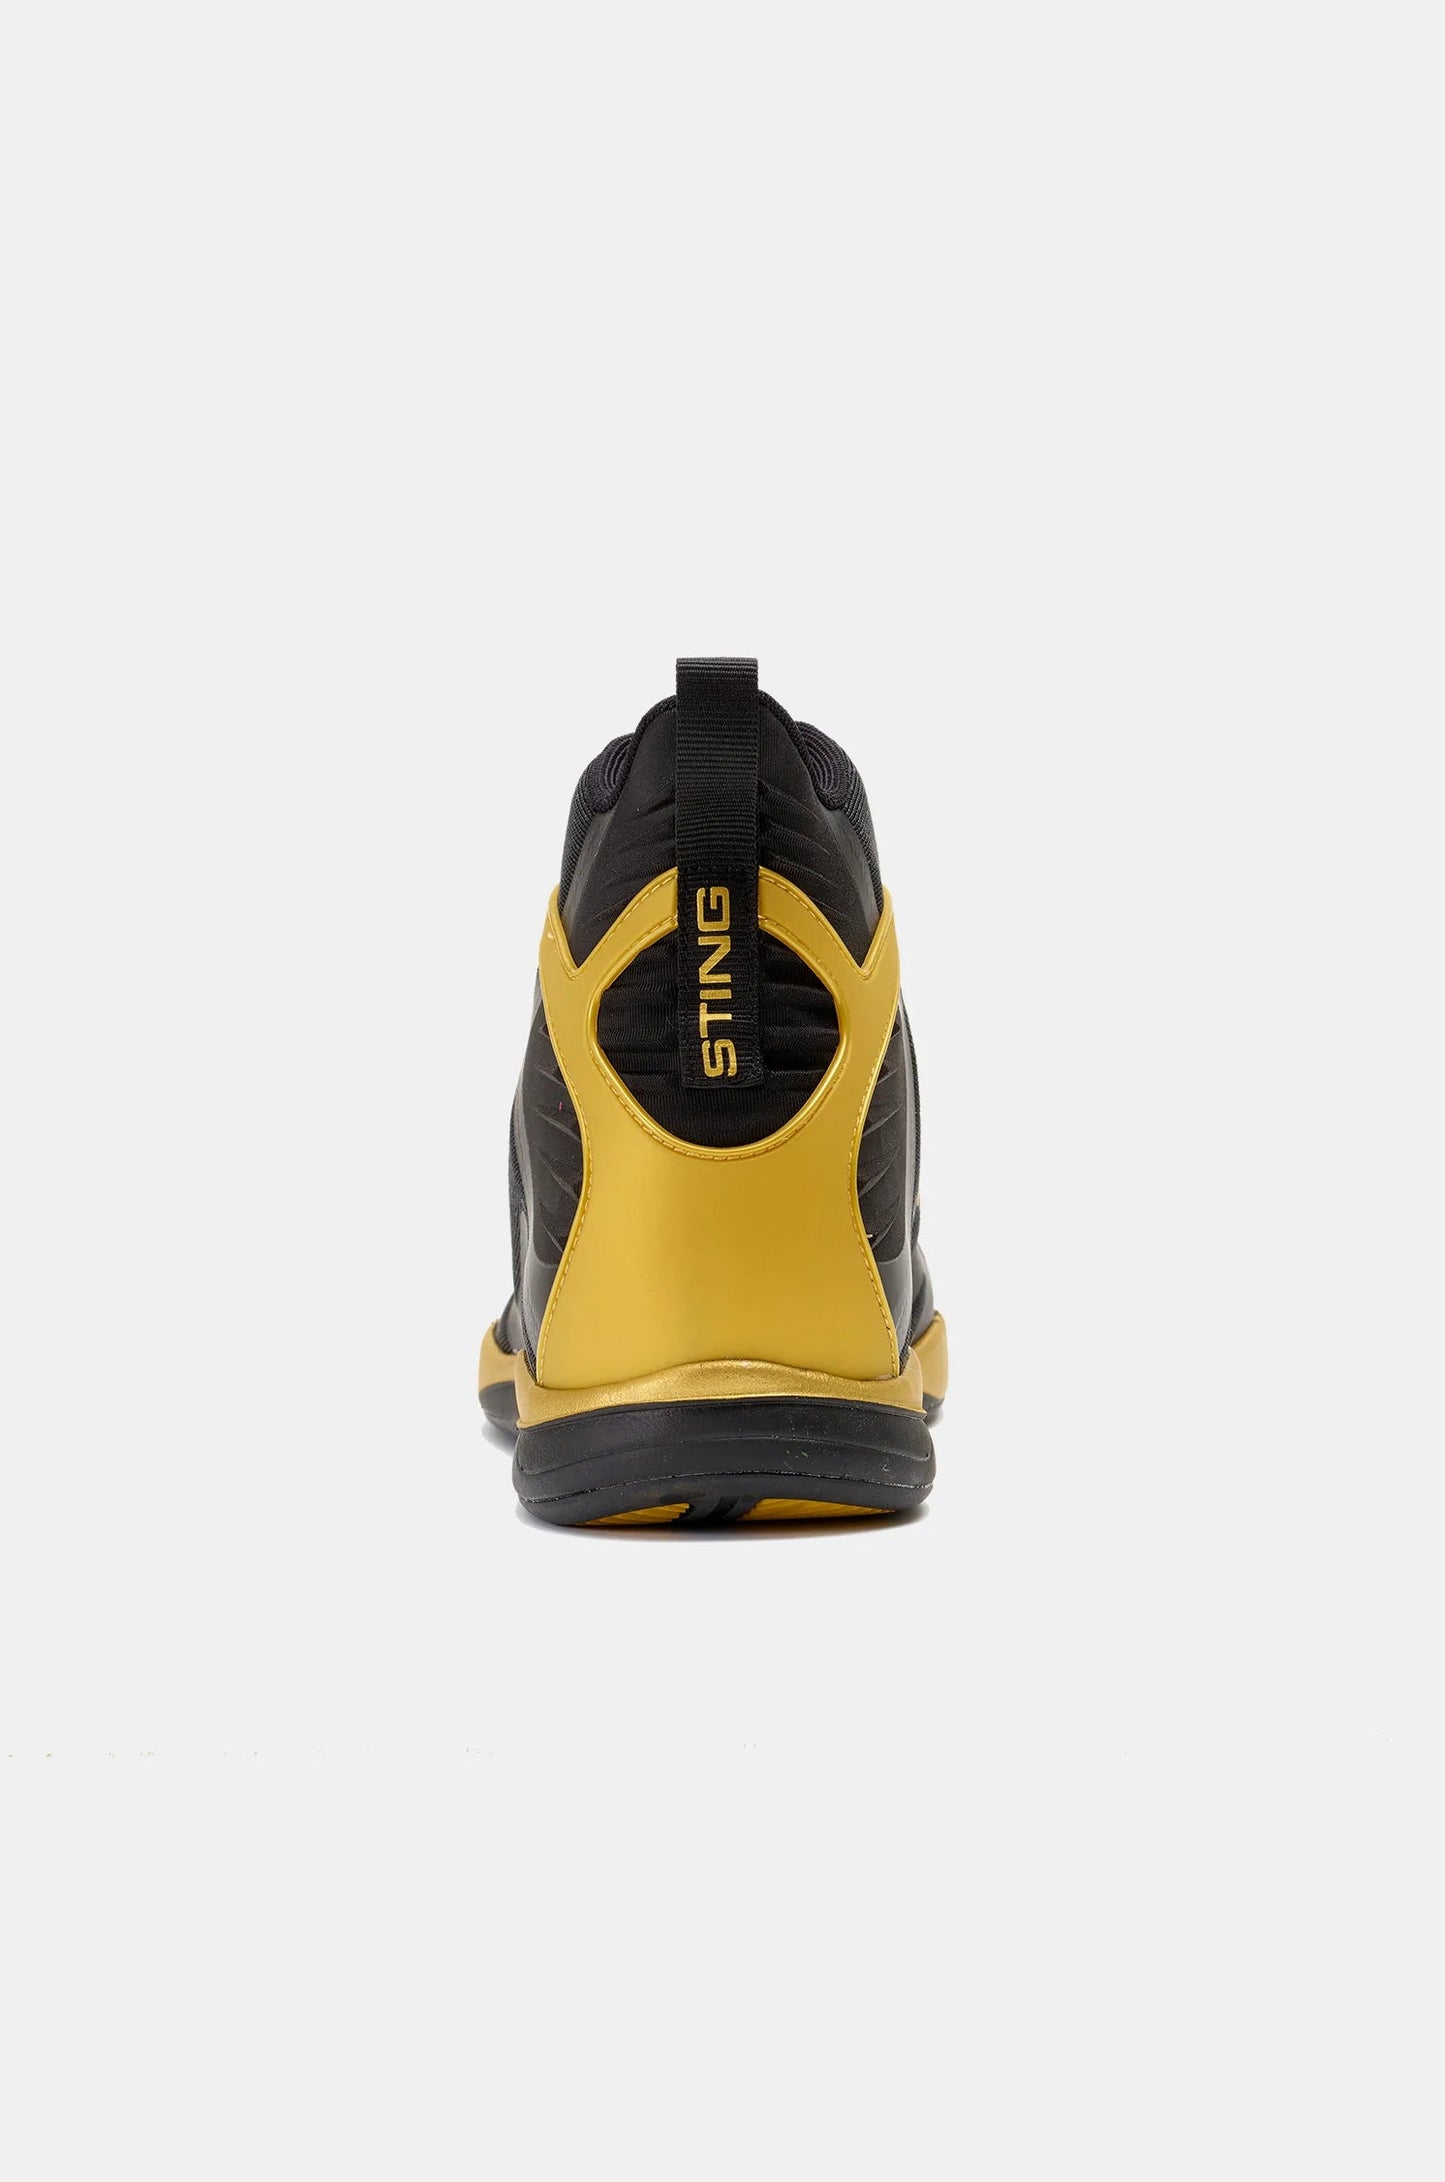 Sting Viper Boxing Shoes 2.0 - Multiple Colours